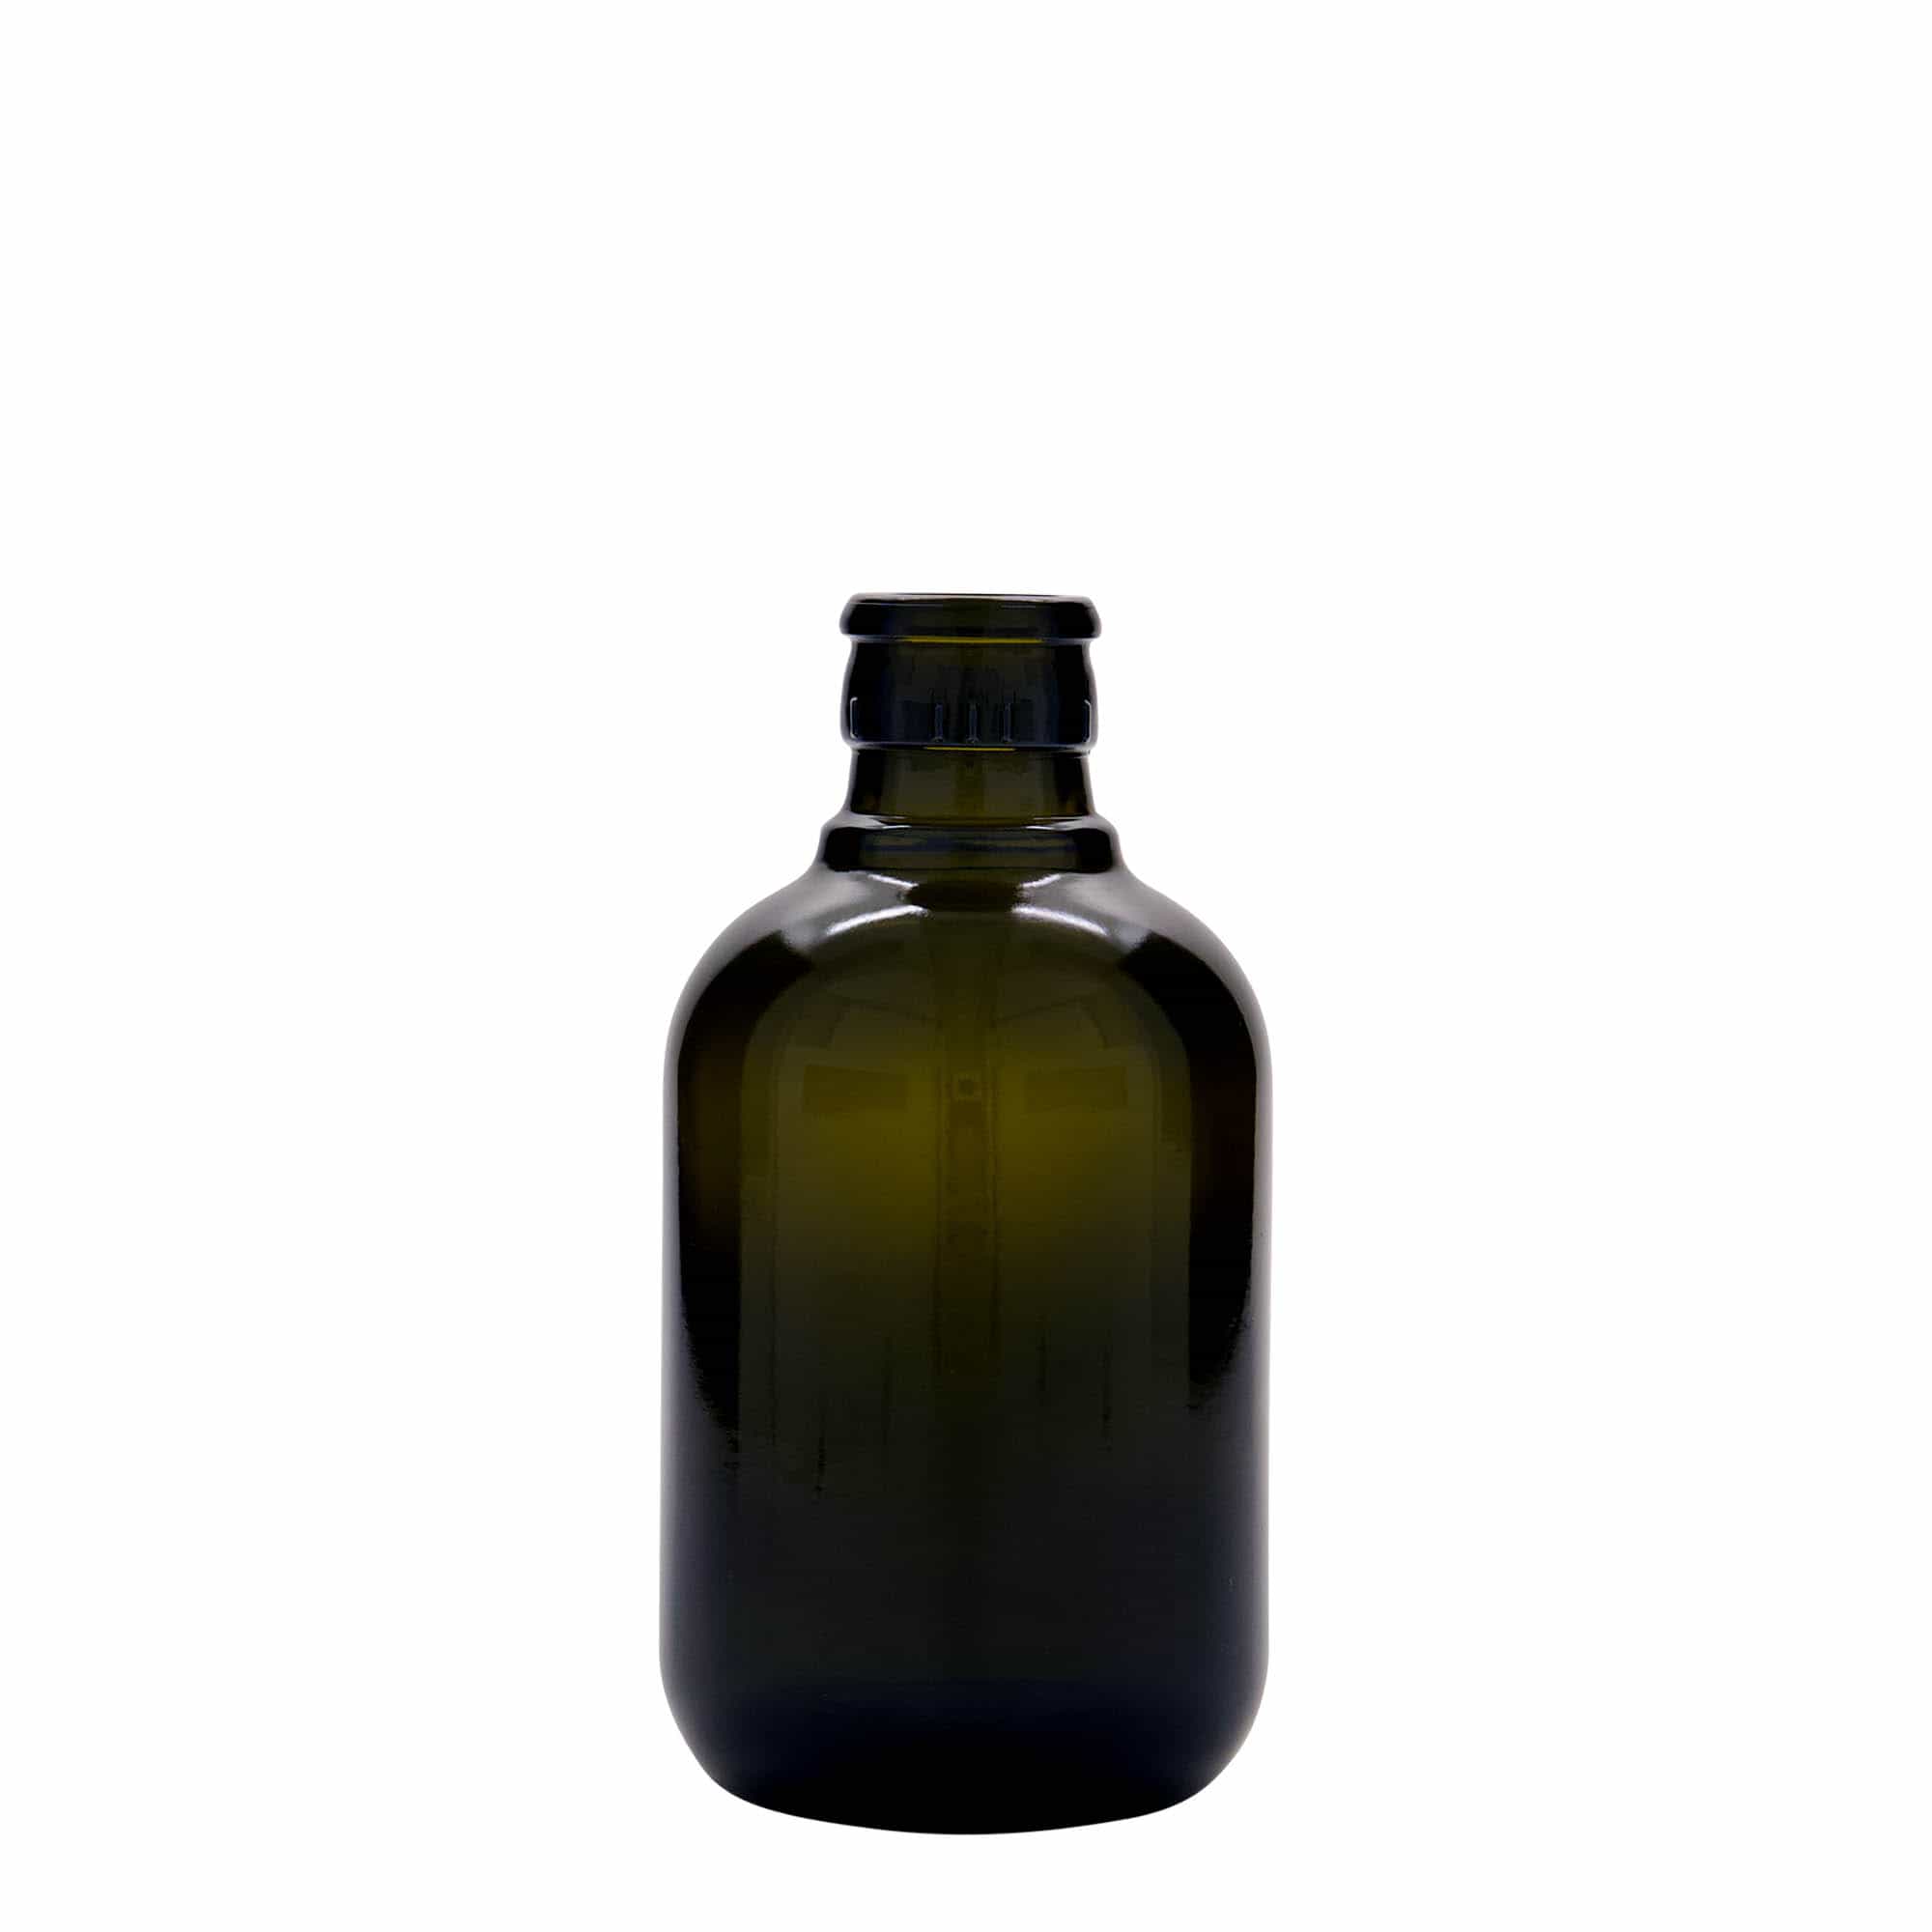 250 ml eddike-/olieflaske 'Biolio', glas, antikgrøn, åbning: DOP